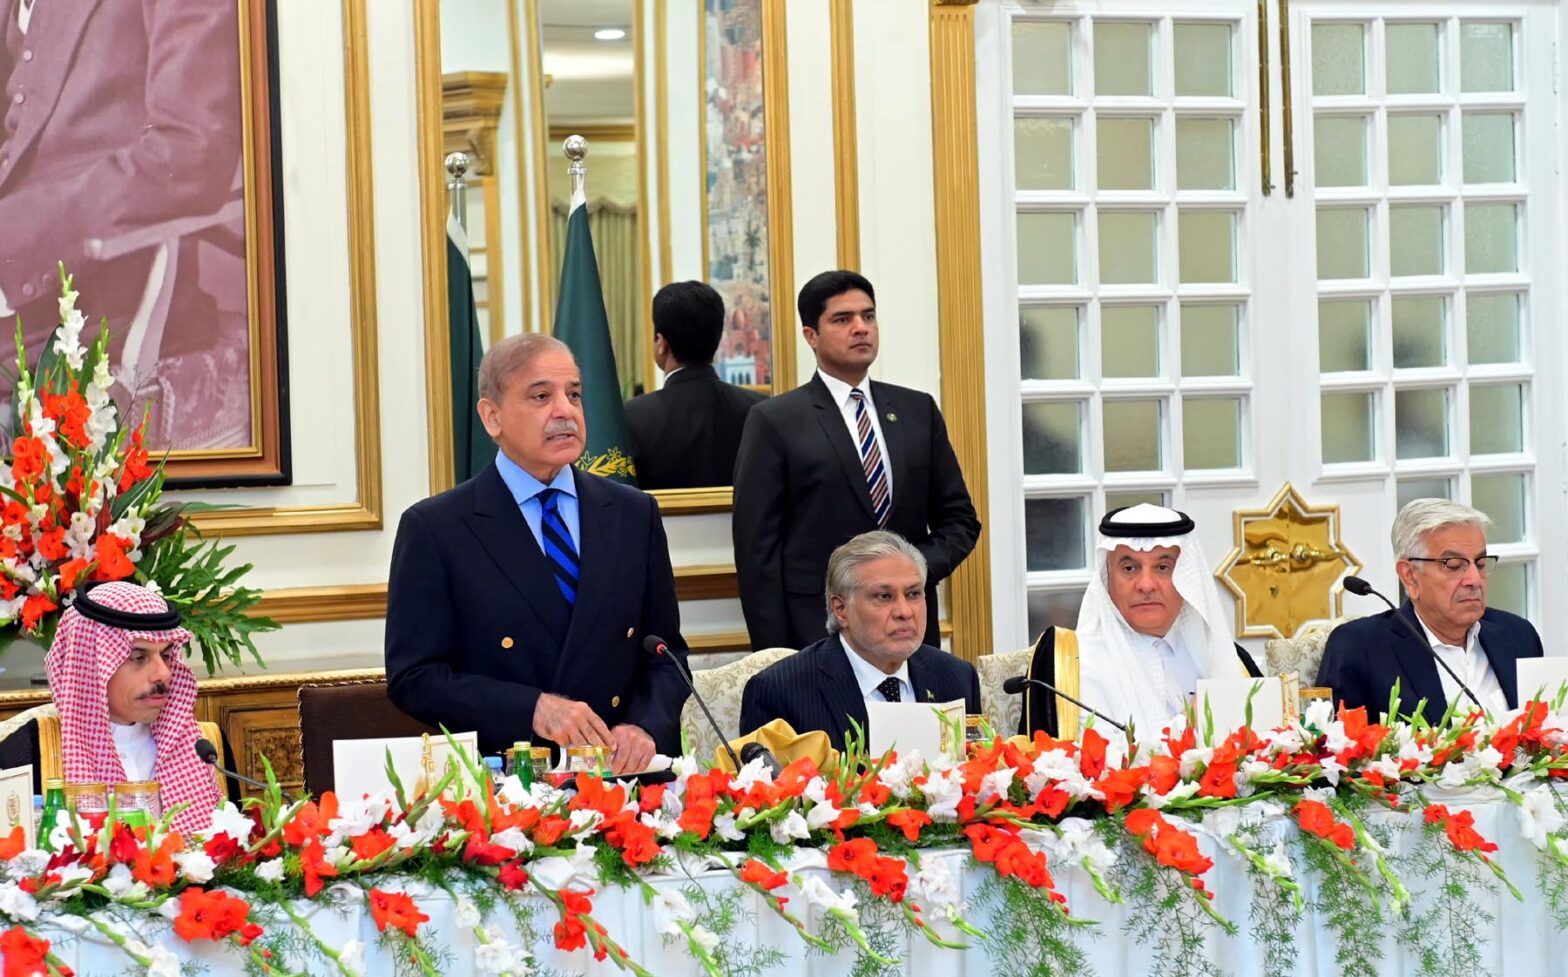 Saudi delegation's visit to usher in new era of close cooperation: PM